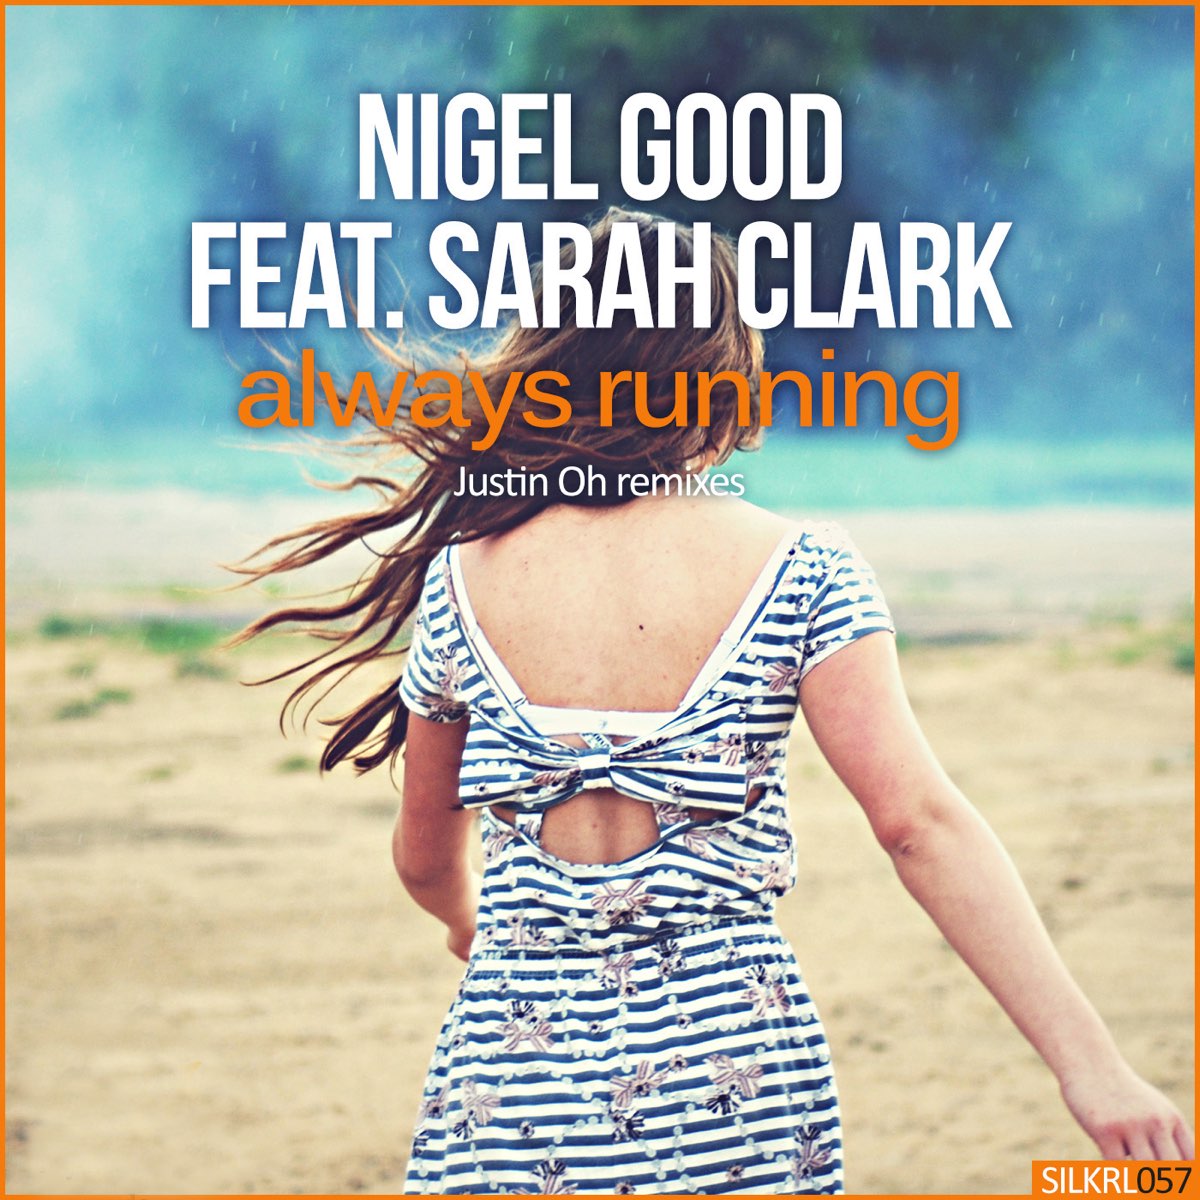 Good feat. Nigel good. Always Running. Nigel good кто Автор. Nigel Clark make believe Love.